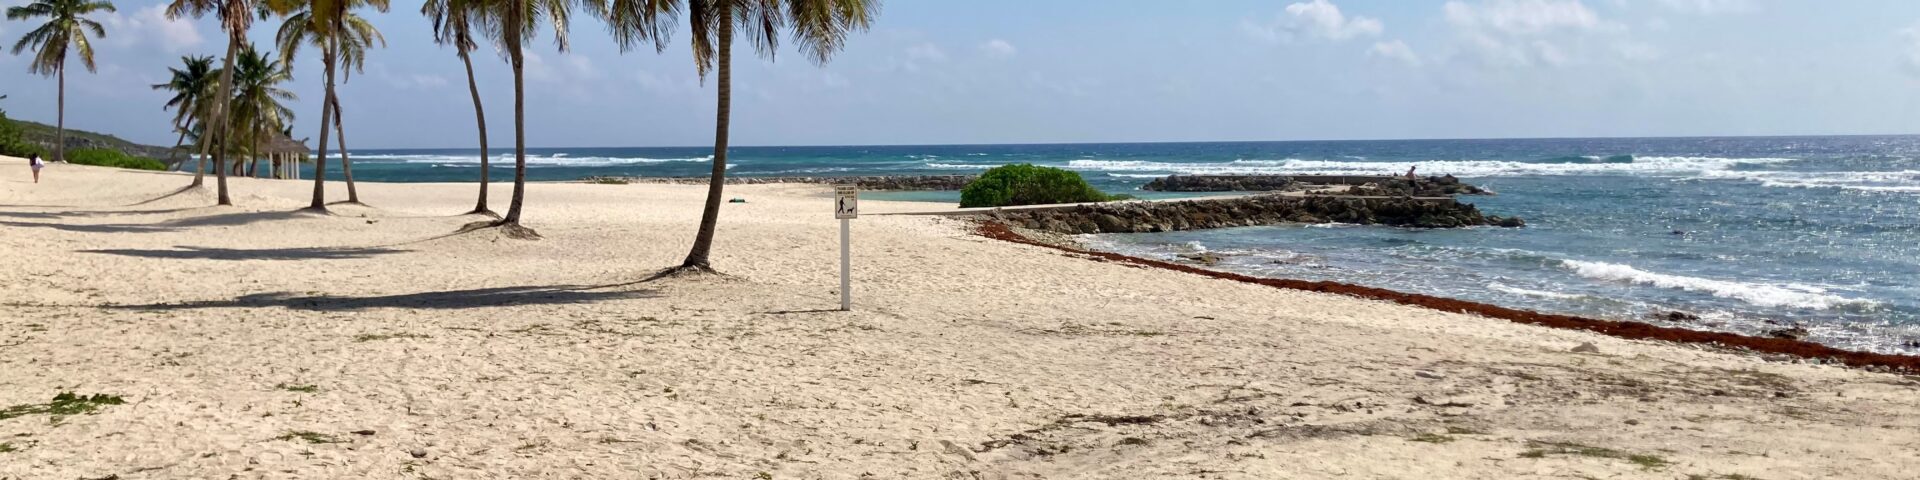 Beaches on Grand Cayman Island